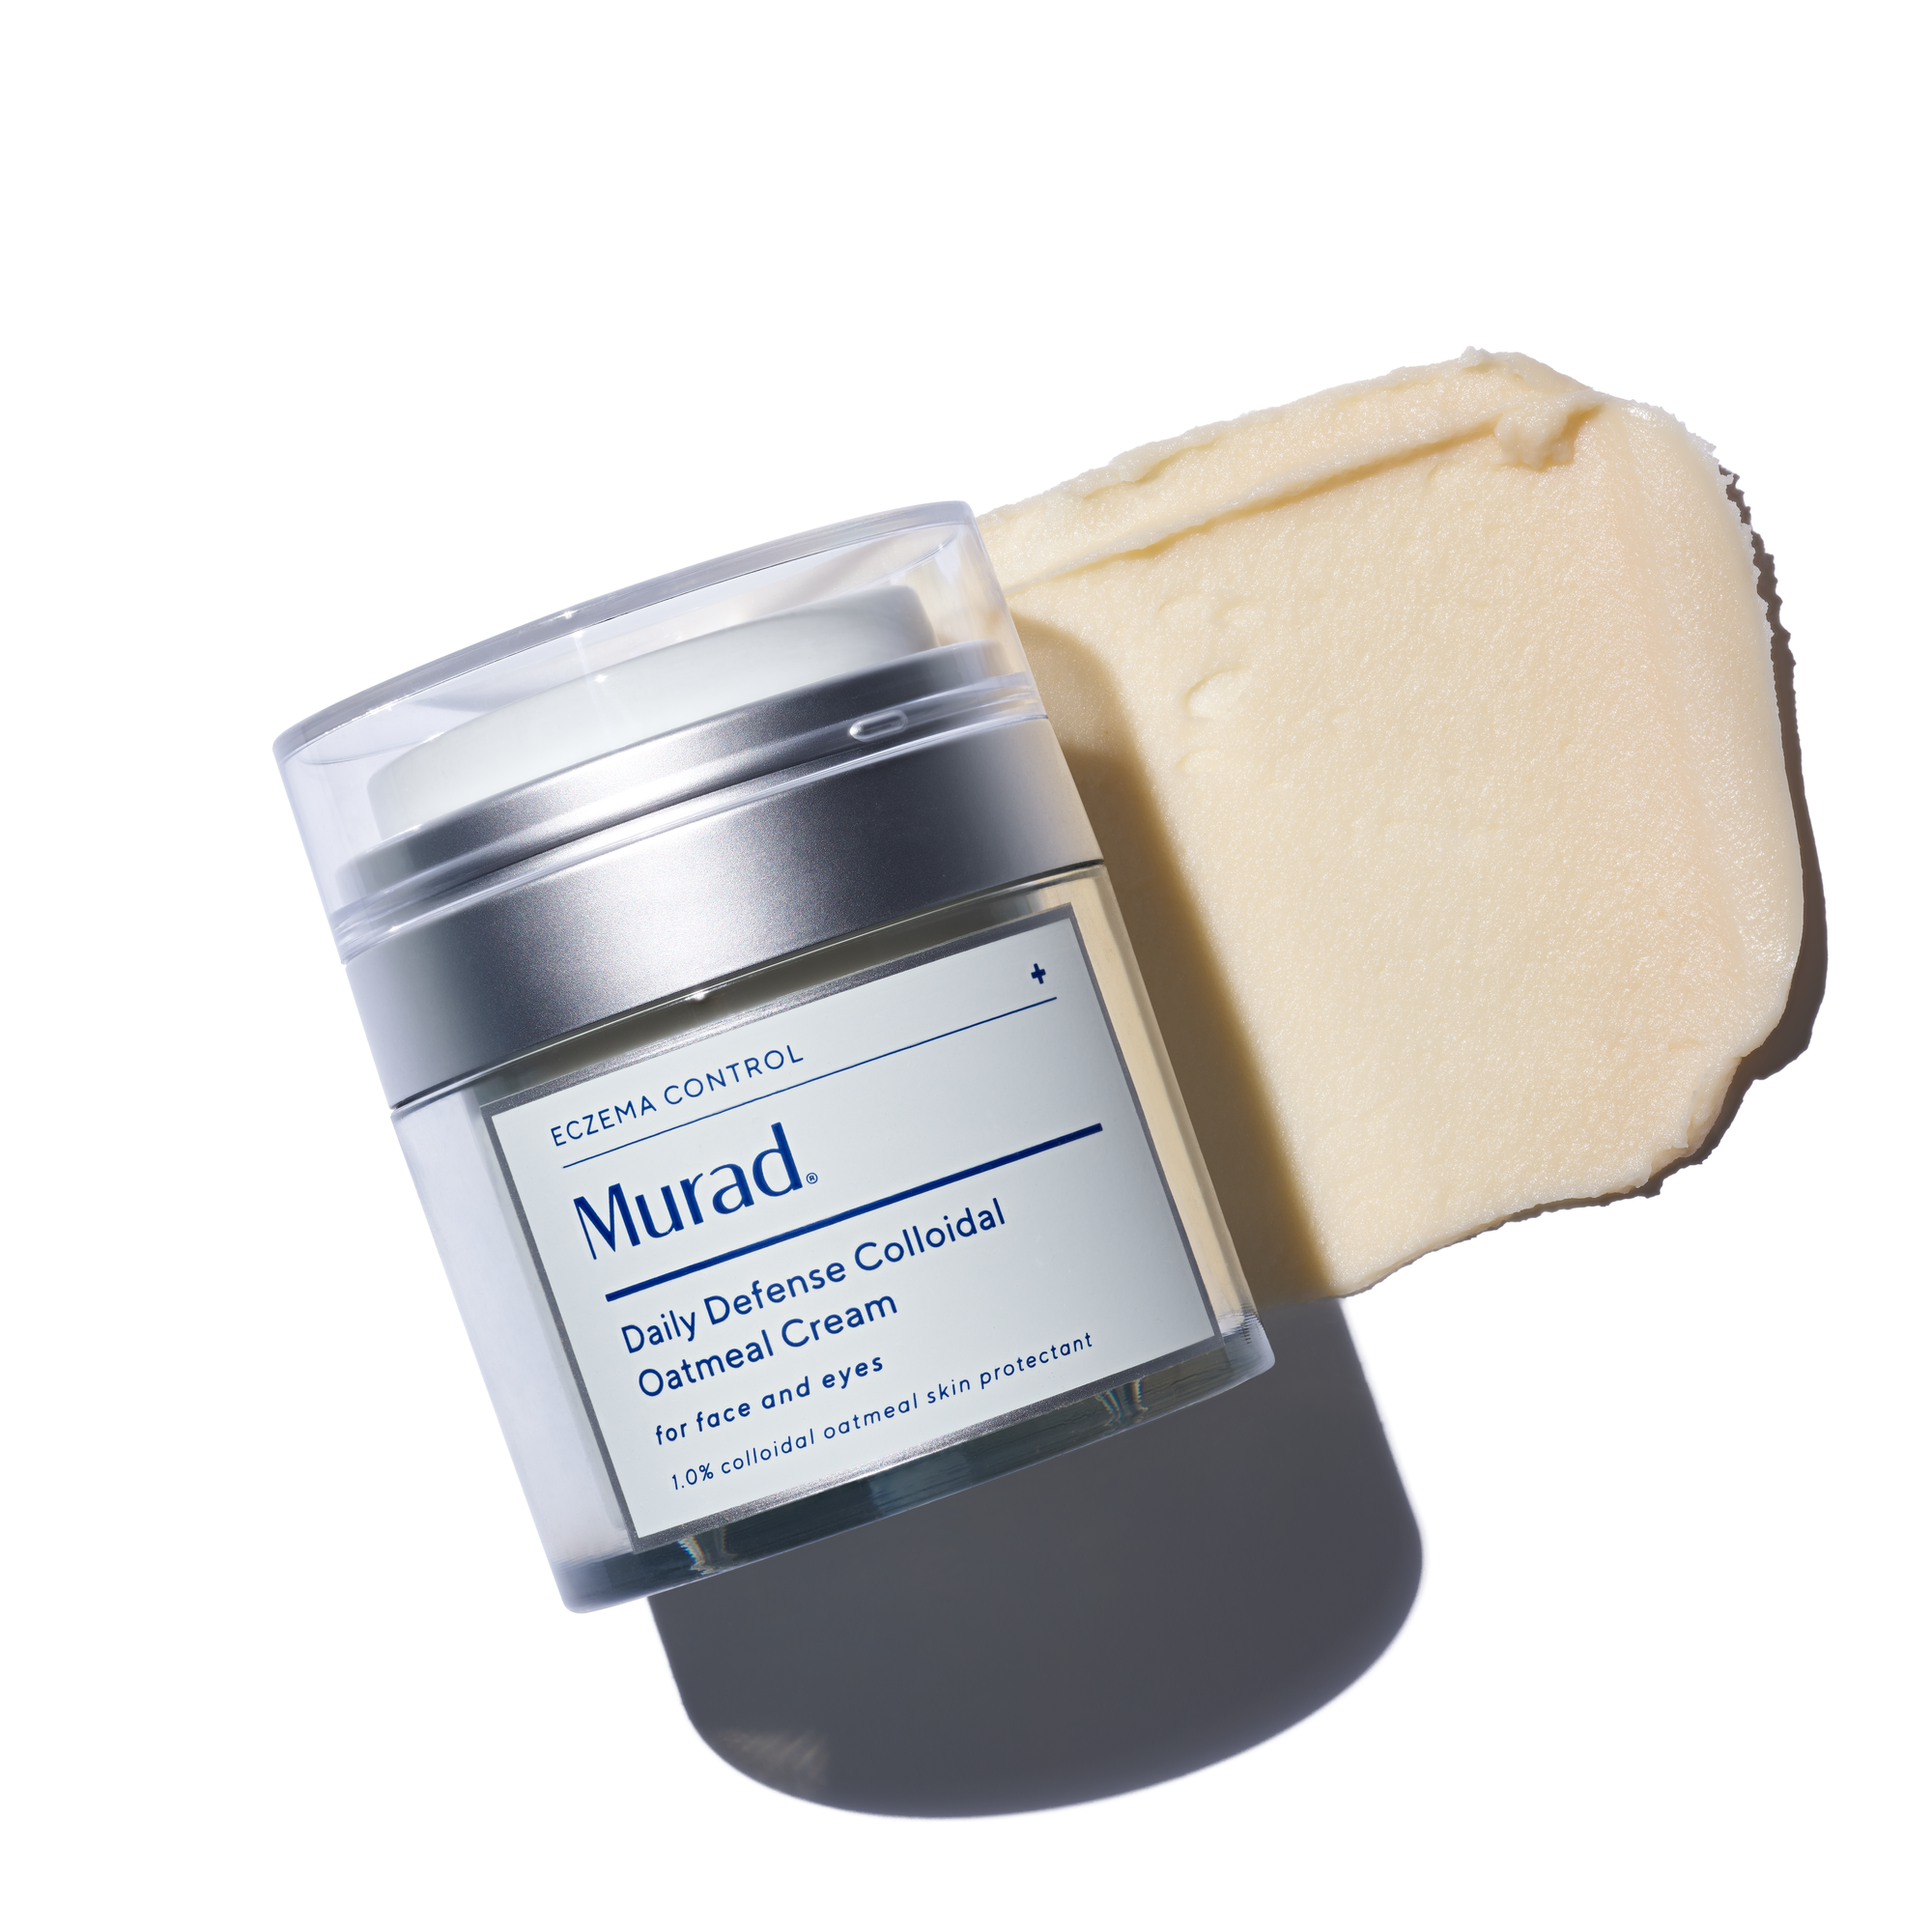 Murad Daily Defense Colloidal Oatmeal Cream / 1.7OZ